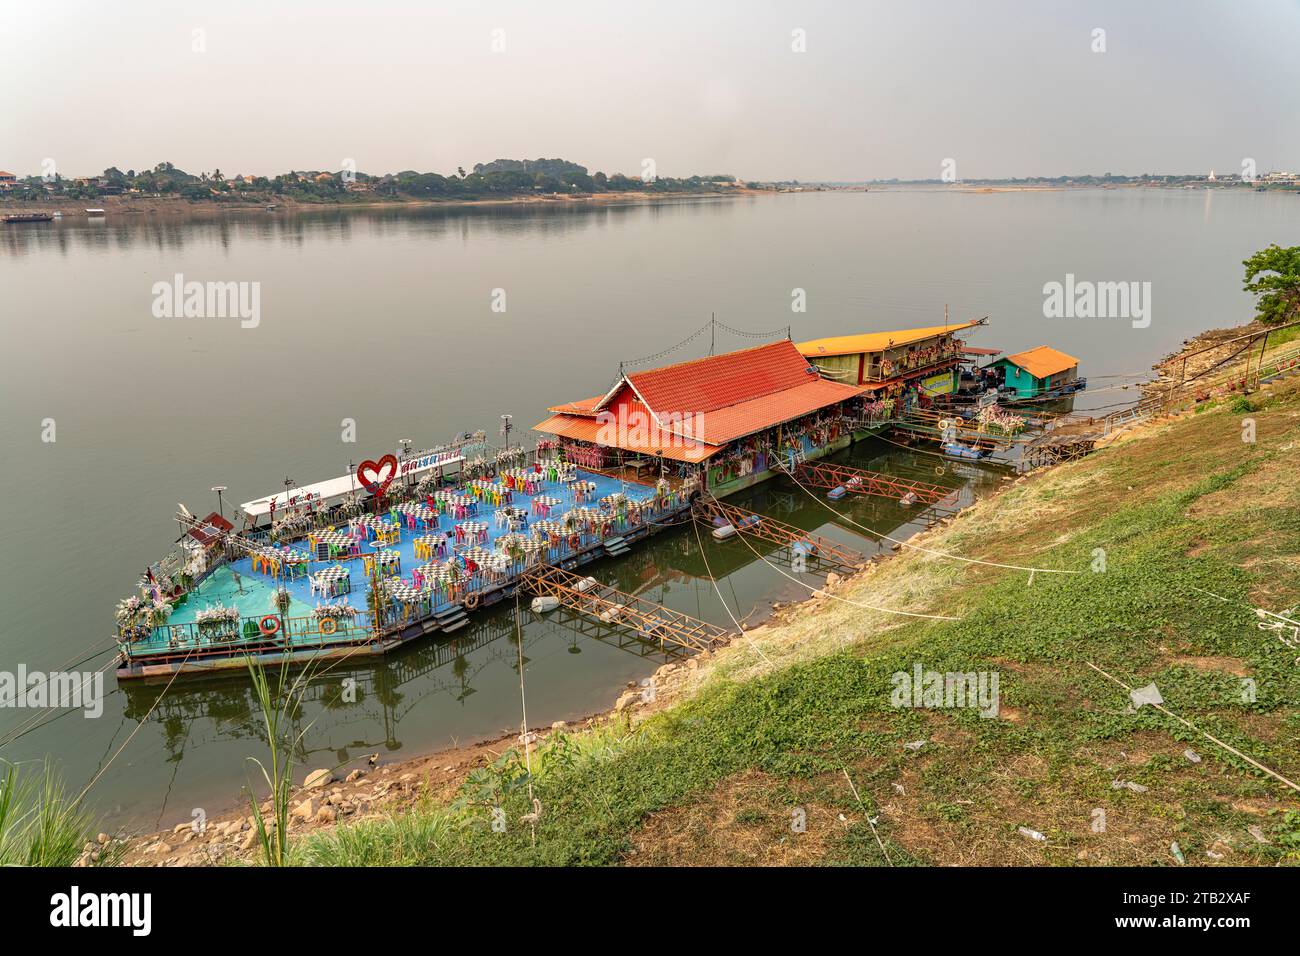 Schwimmendes Restaurant auf dem  Mekong und das Mekong-Ufer in Nong Khai und Laos, Thailand, Asien   |  Floating Restaurant on the  Mekong River and t Stock Photo